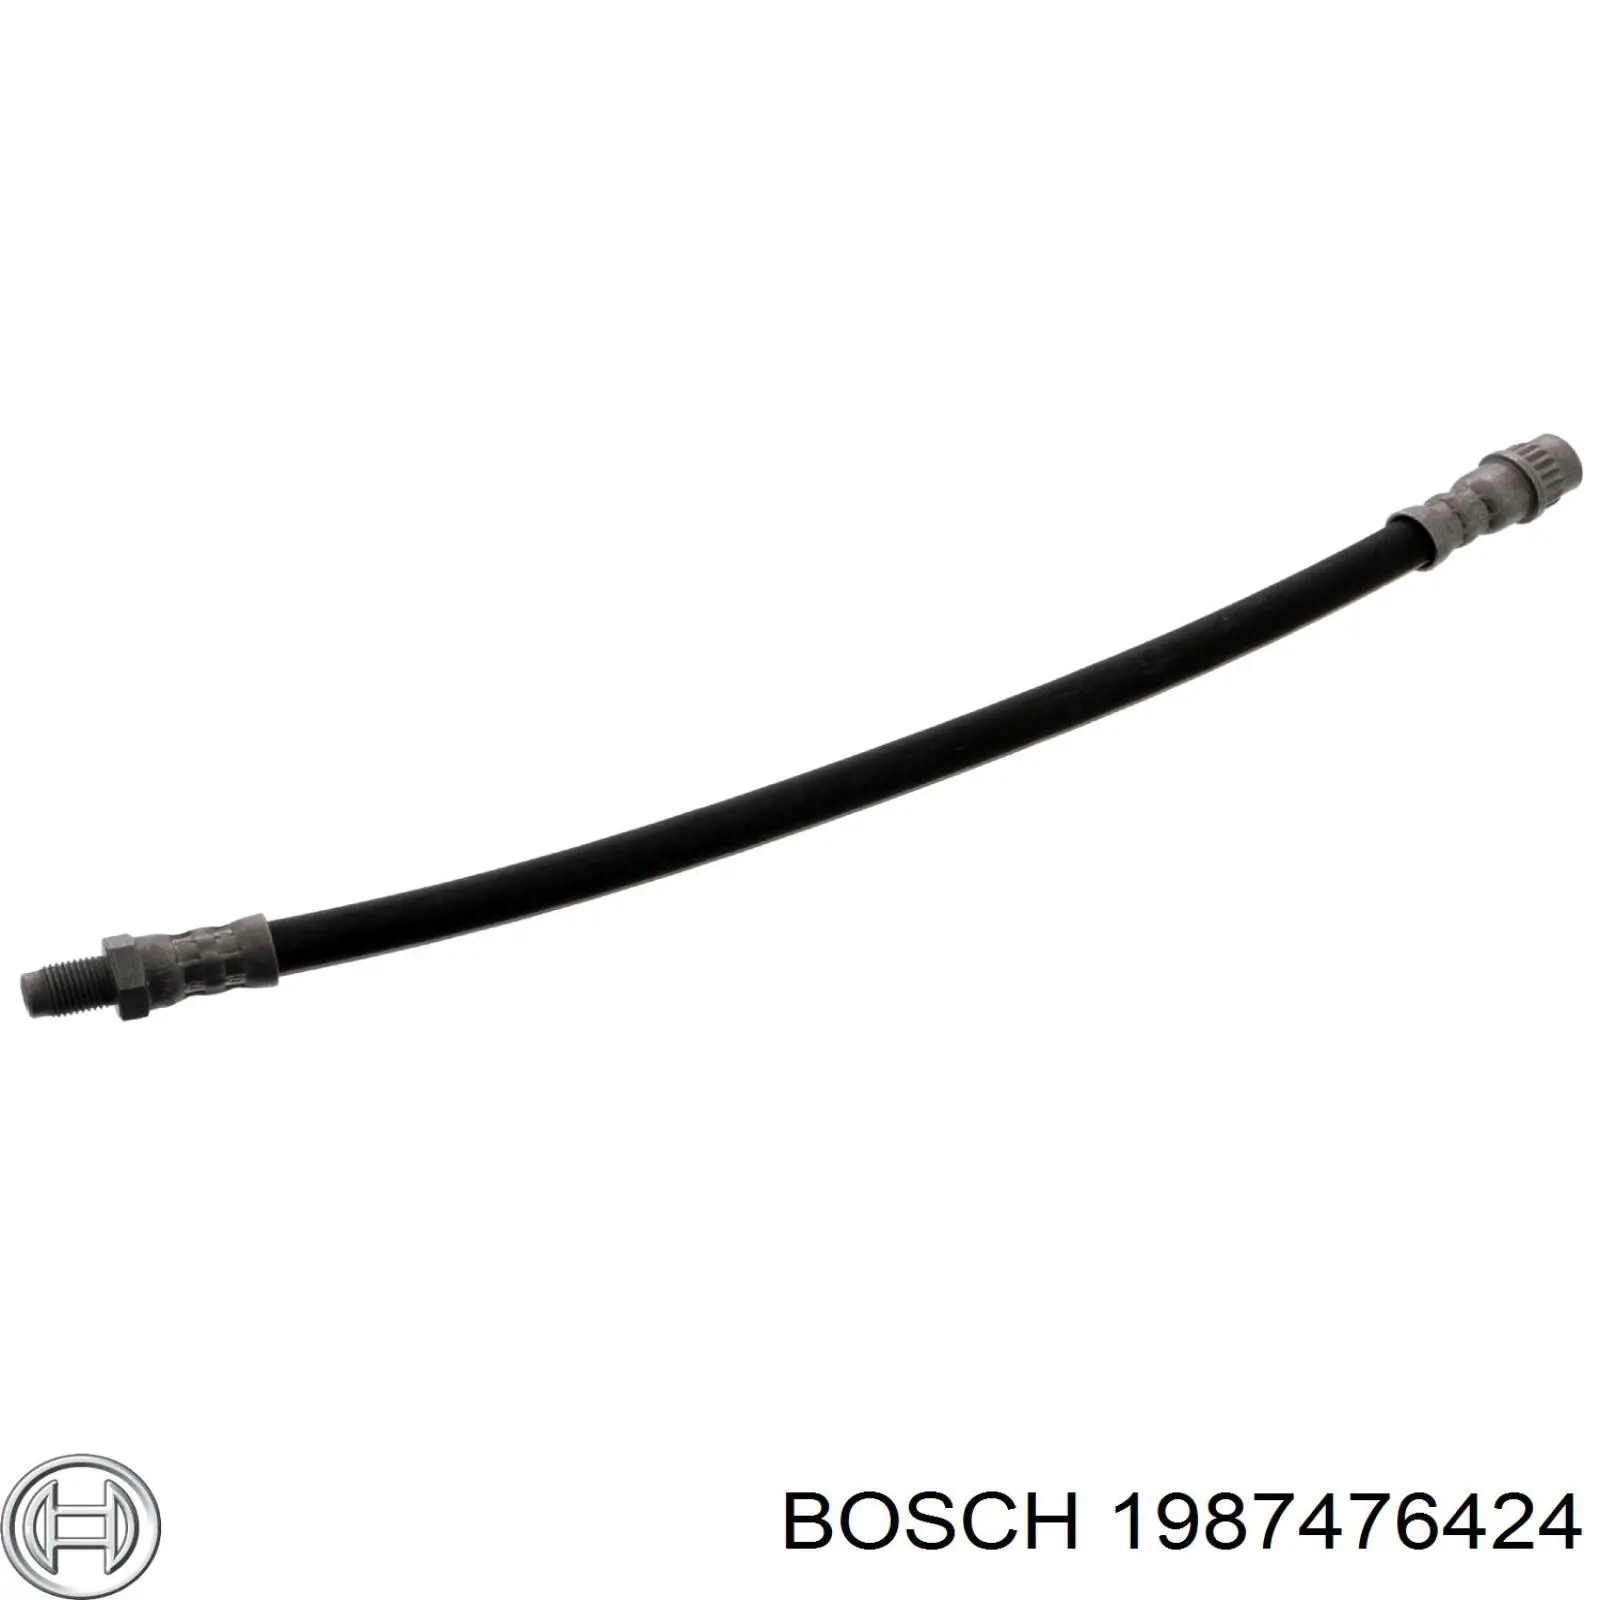 1987476424 Bosch latiguillo de freno delantero